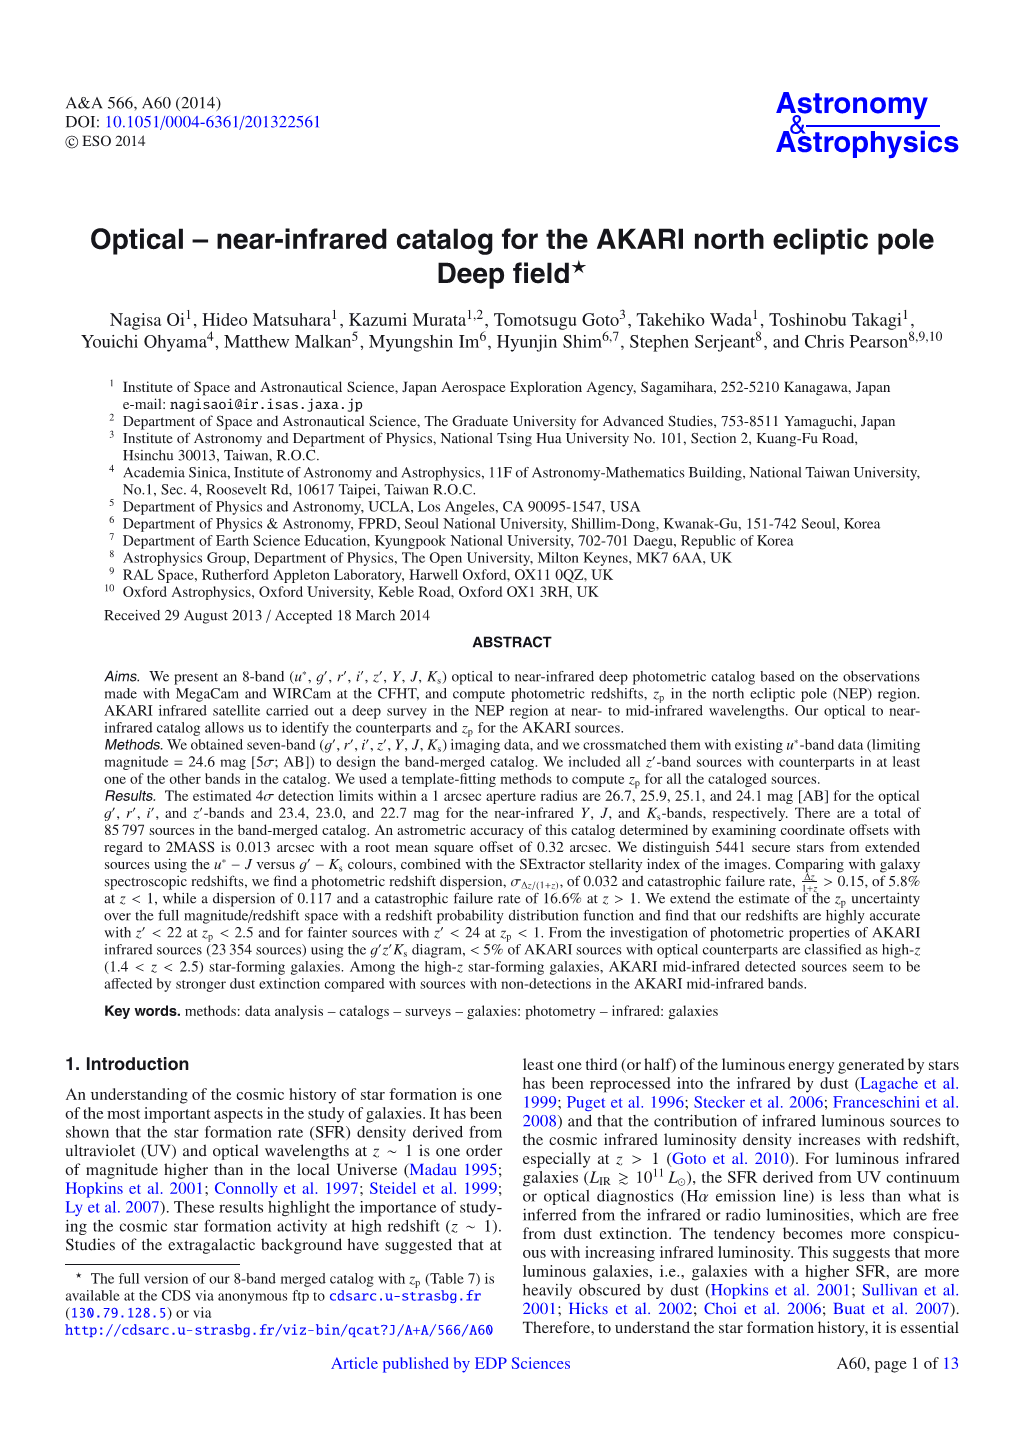 Optical – Near-Infrared Catalog for the AKARI North Ecliptic Pole Deep ﬁeld